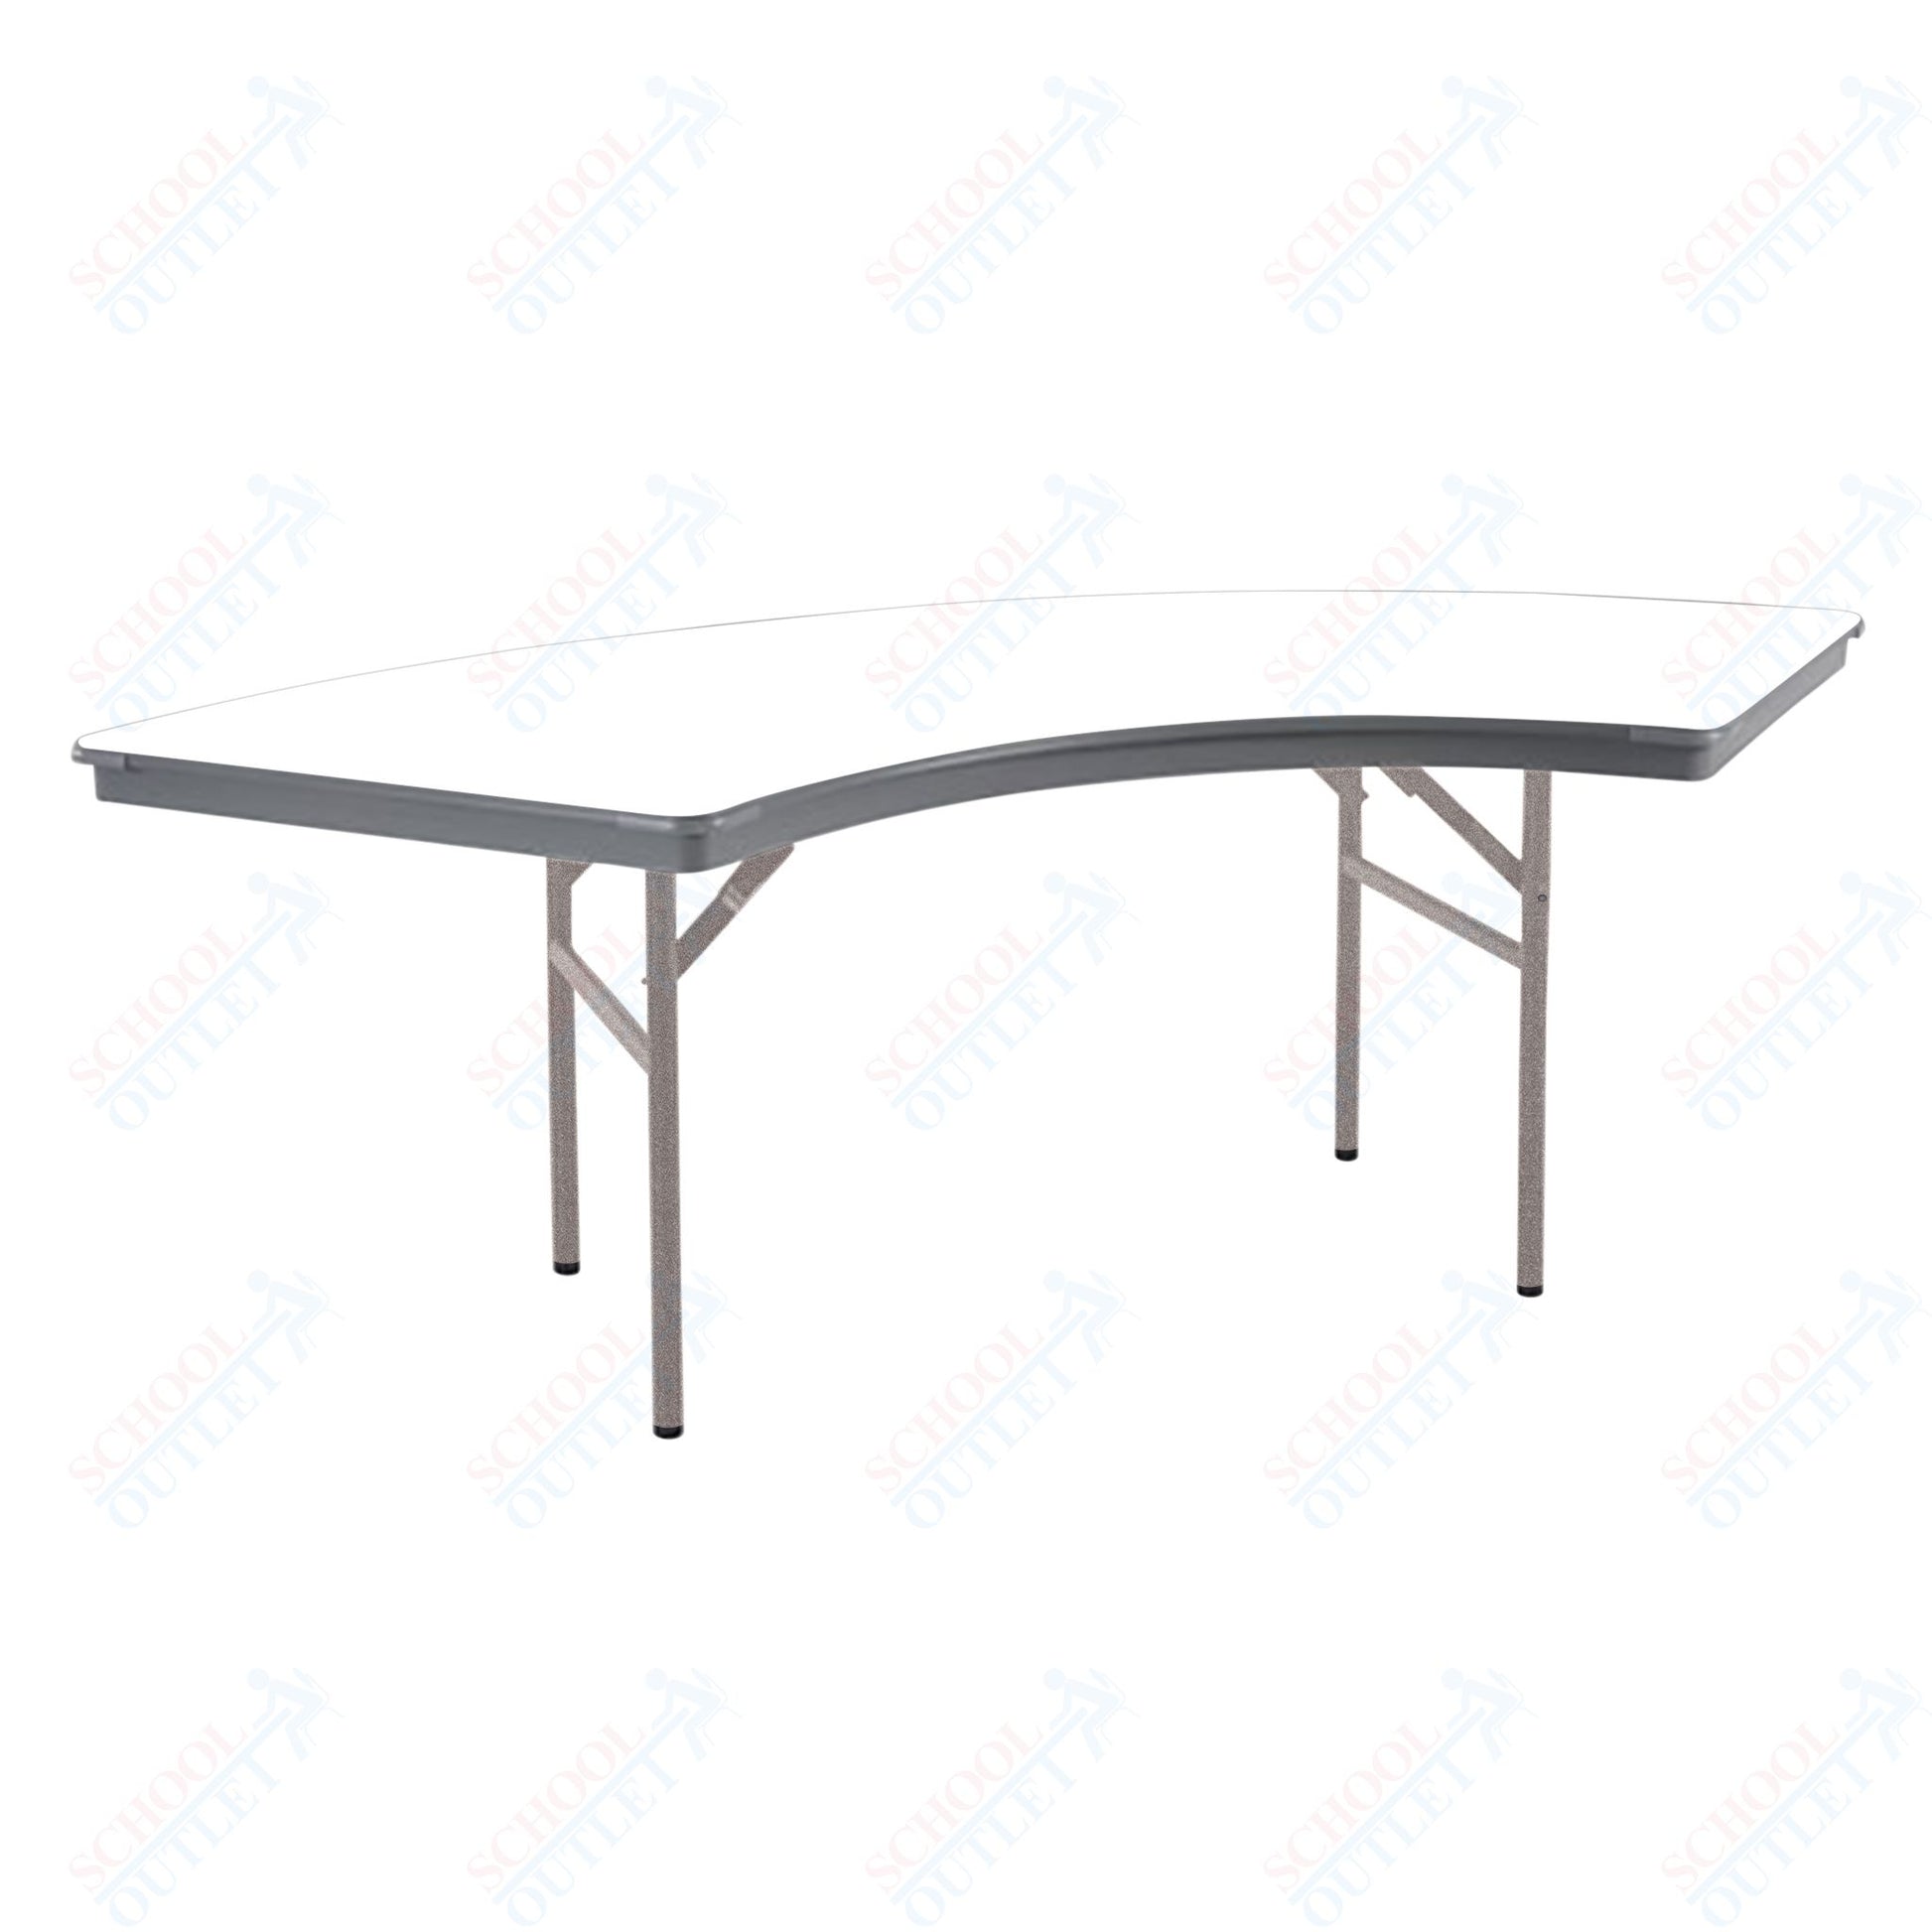 AmTab Dynalite Featherweight Heavy - Duty ABS Plastic Folding Table - Serpentine - 30"W x 72"L x 29"H (AmTab AMT - SE306DL) - SchoolOutlet